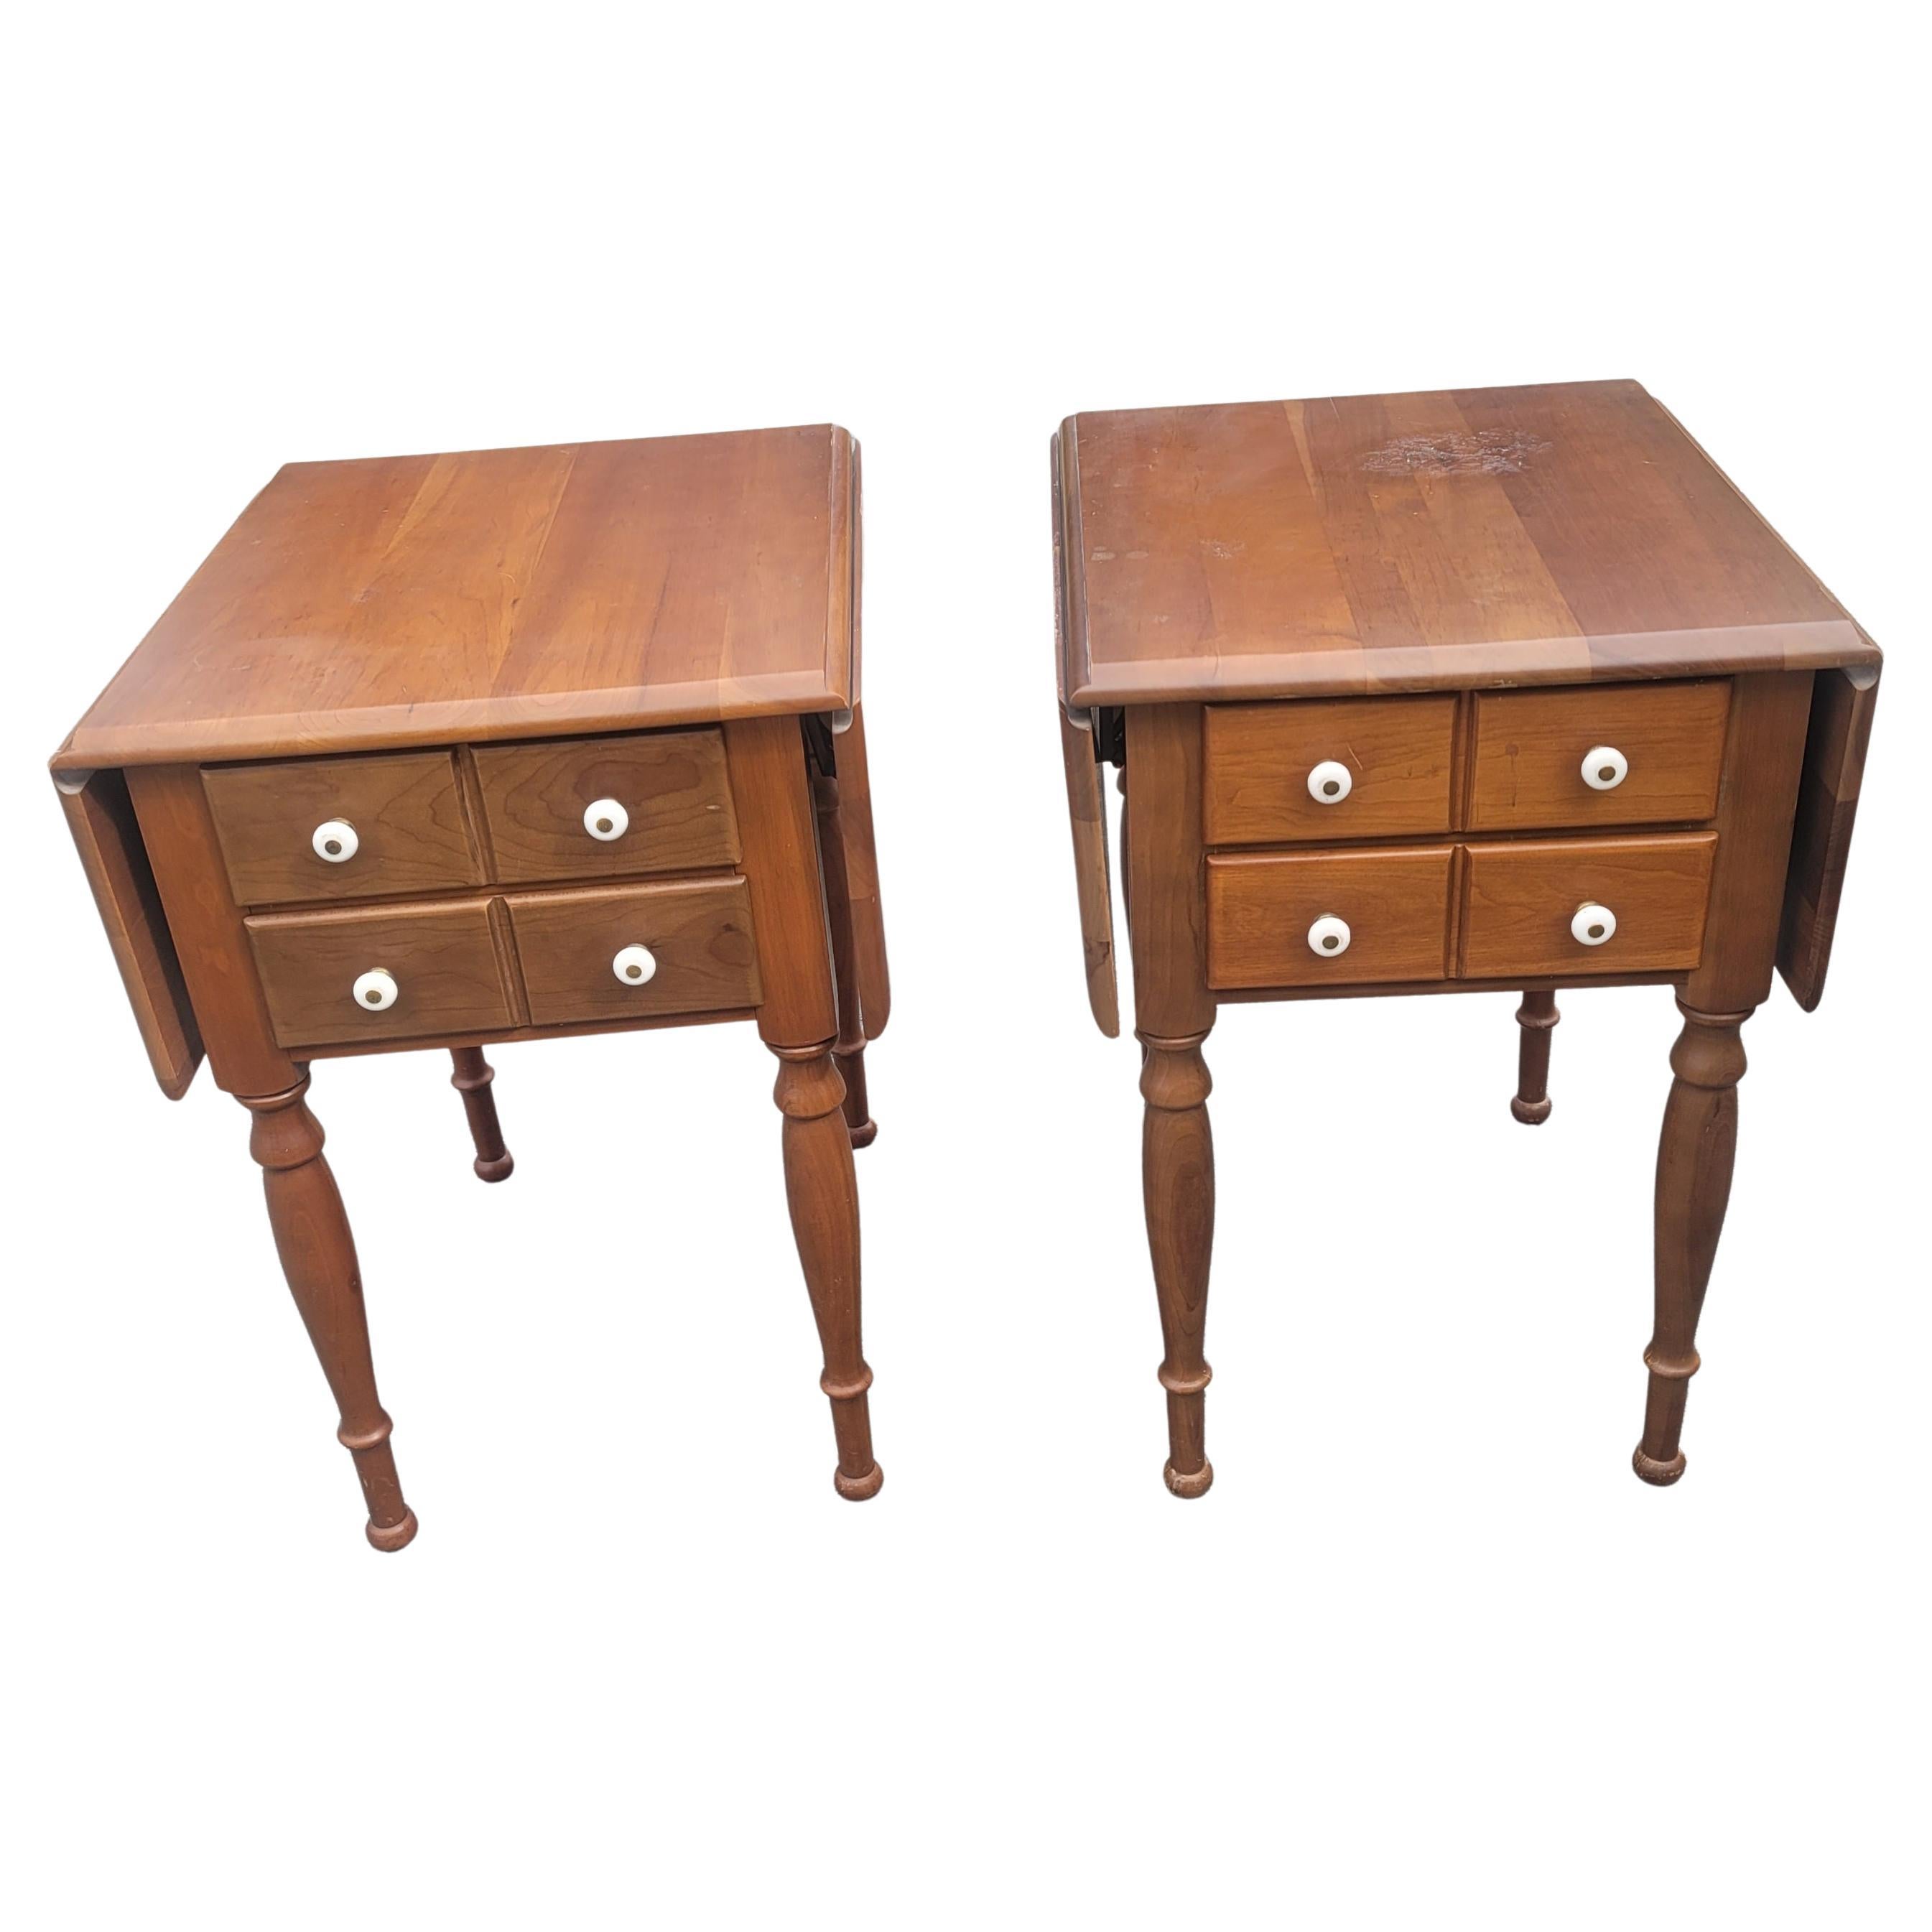 Boring Furniture Victorian Cherry Drop-Leaf Pembroke Tables, a Pair For Sale